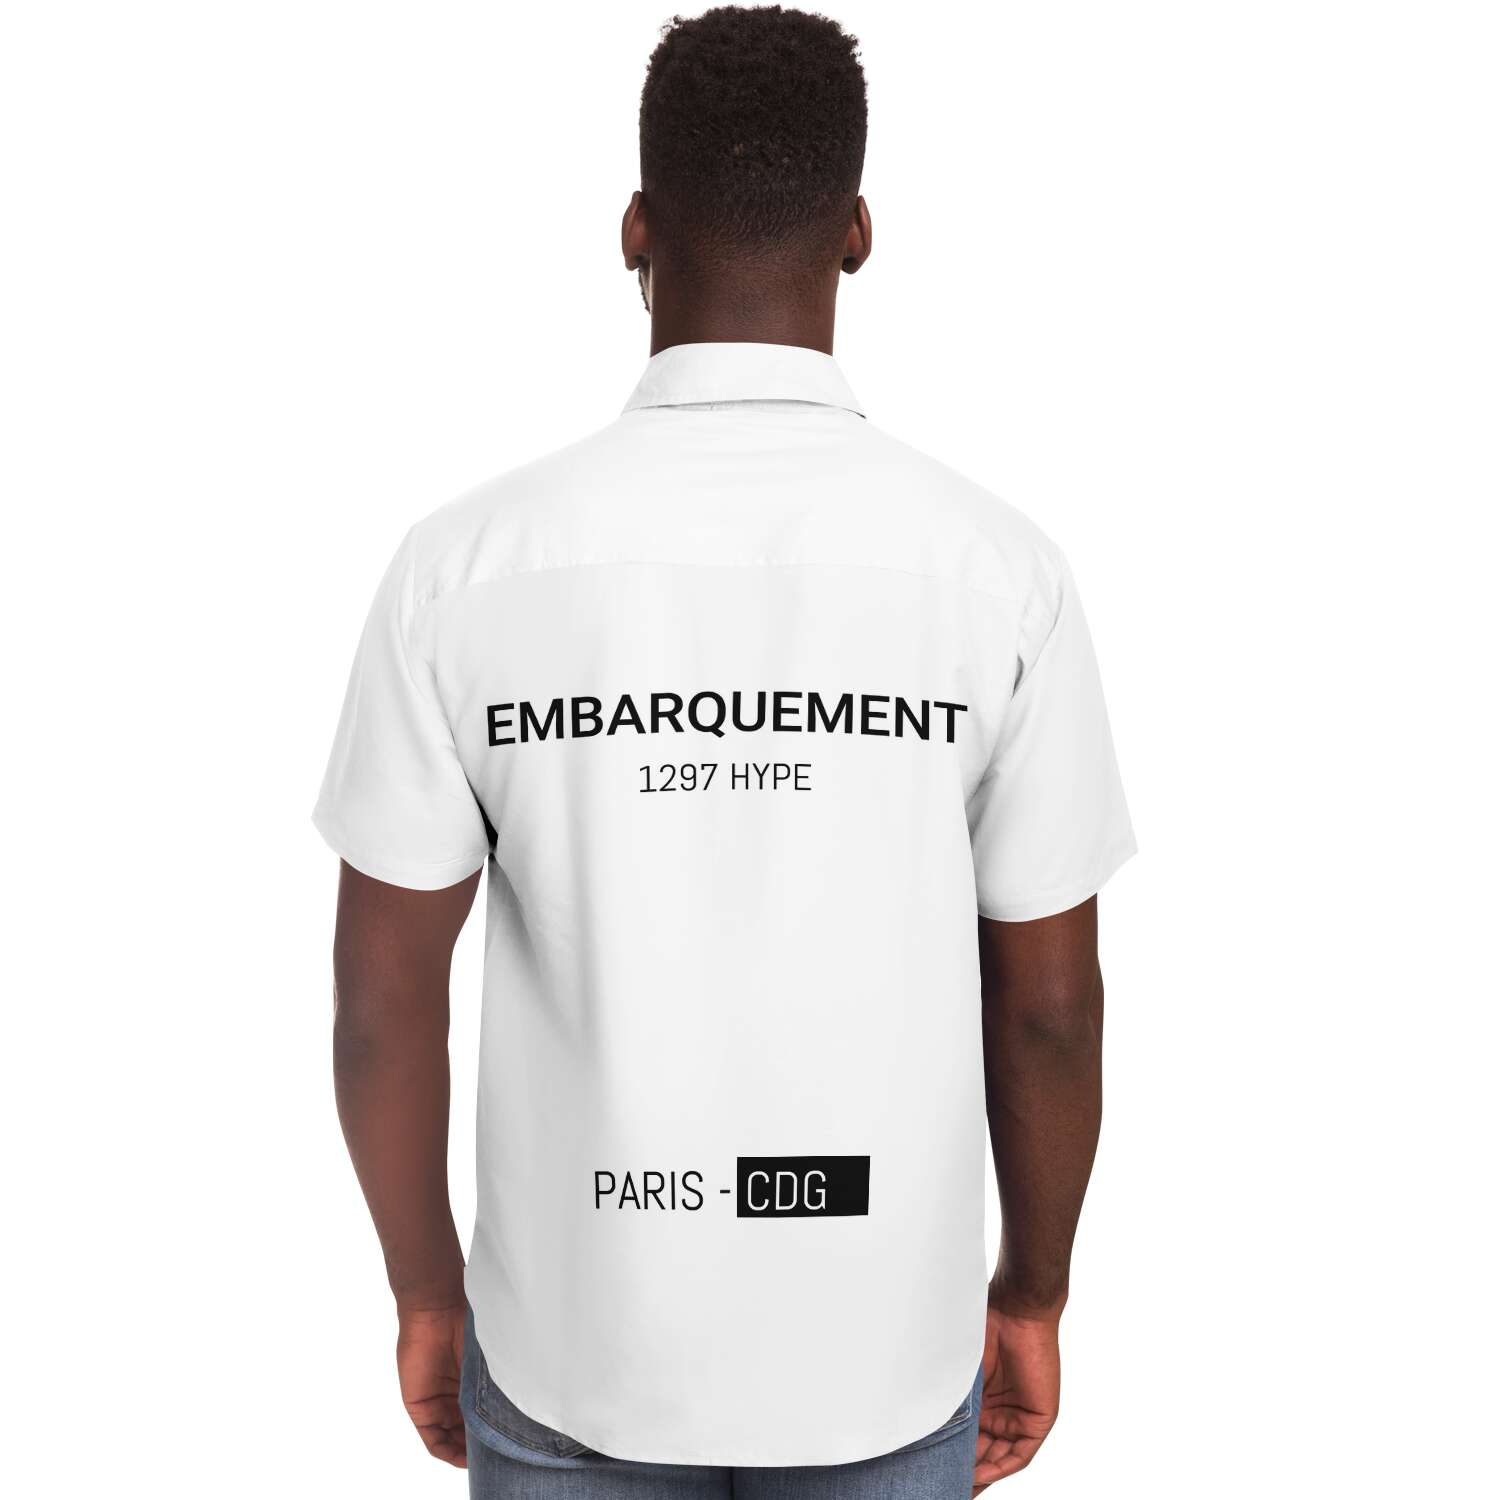 1297 HYPE "Embarquement" Shirt WHT